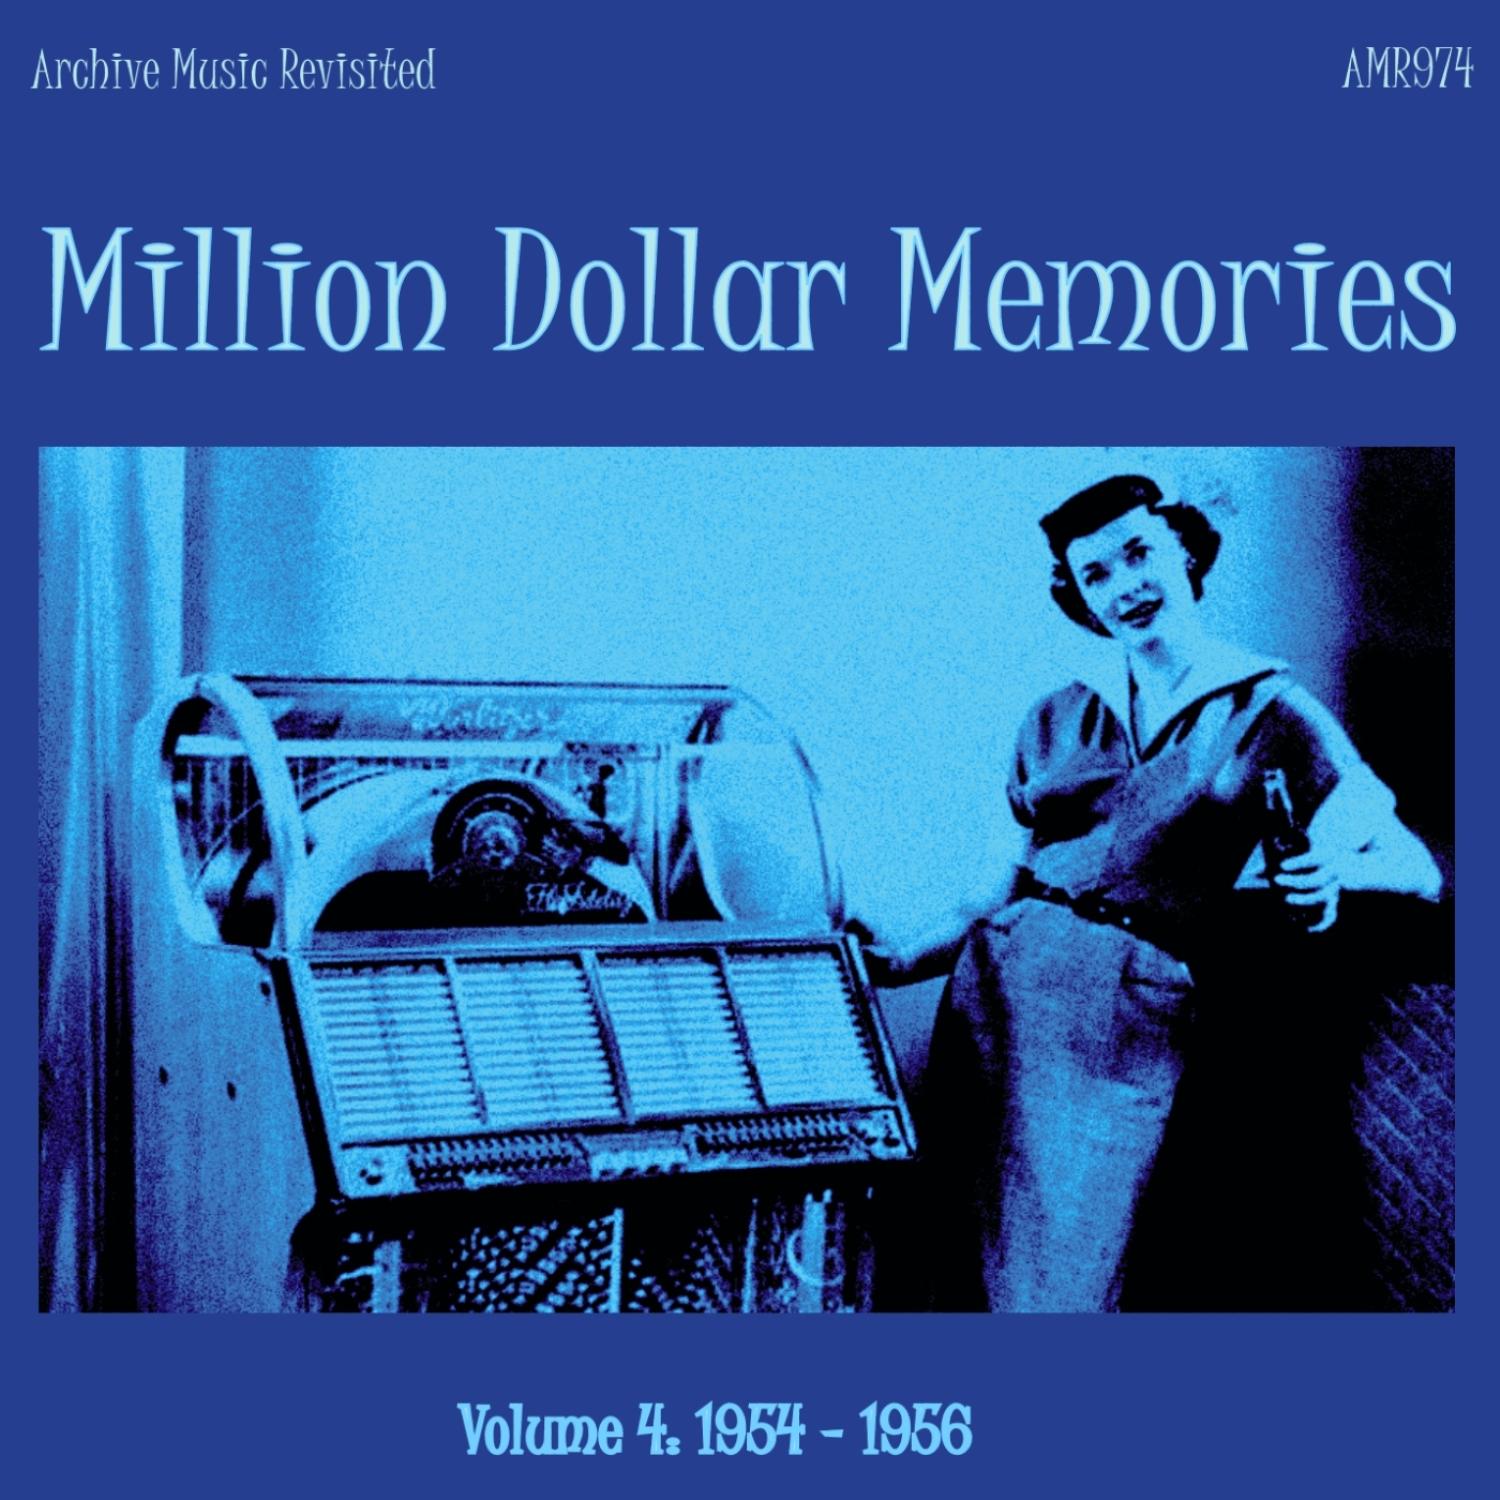 Million Dollar Memories Volume 4 (1954-1956)